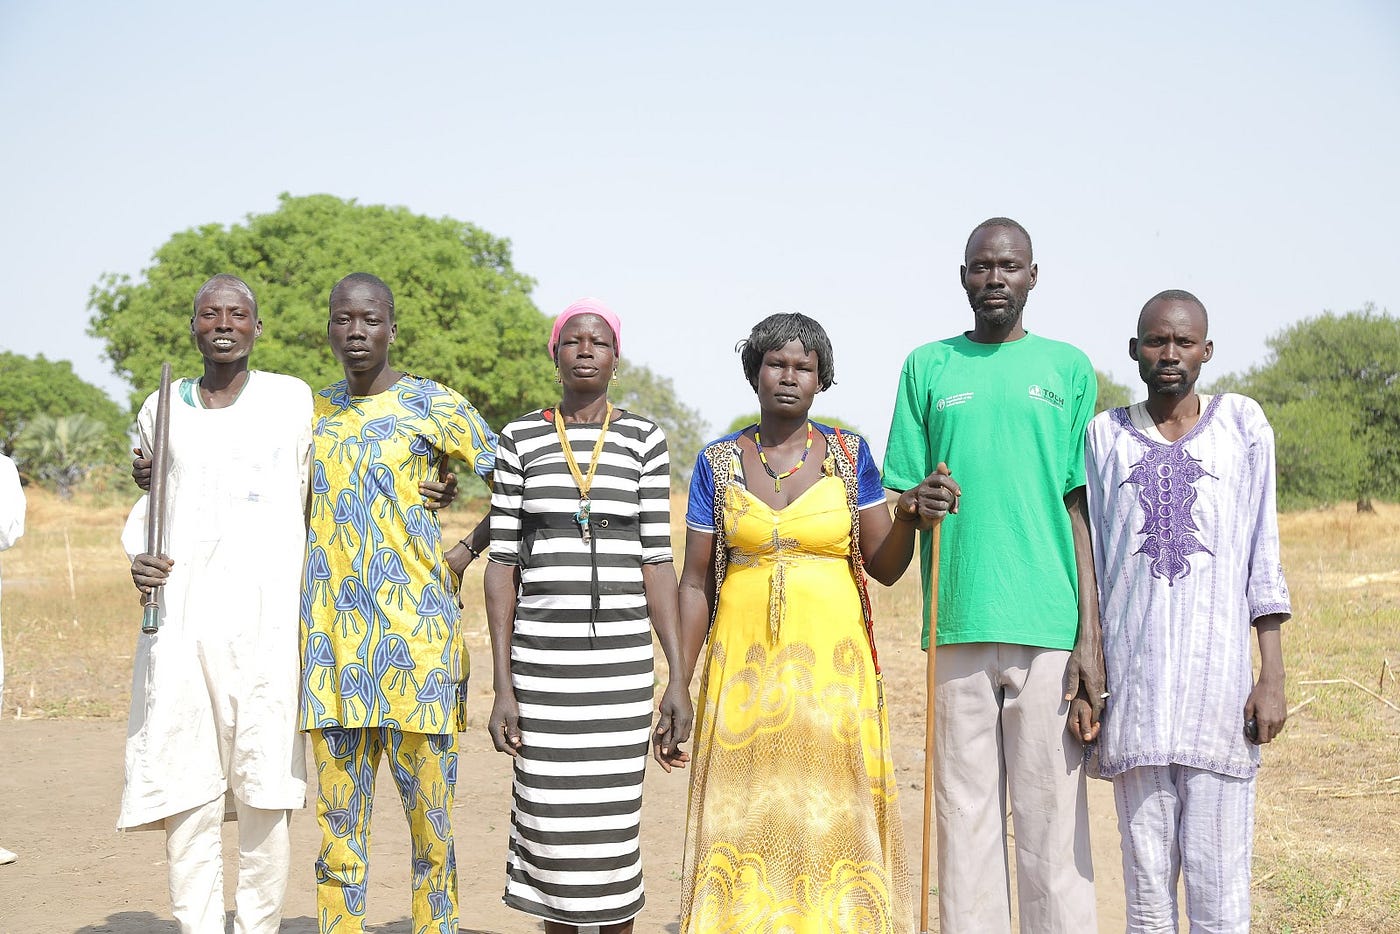 Residents of Tonj, South Sudan.